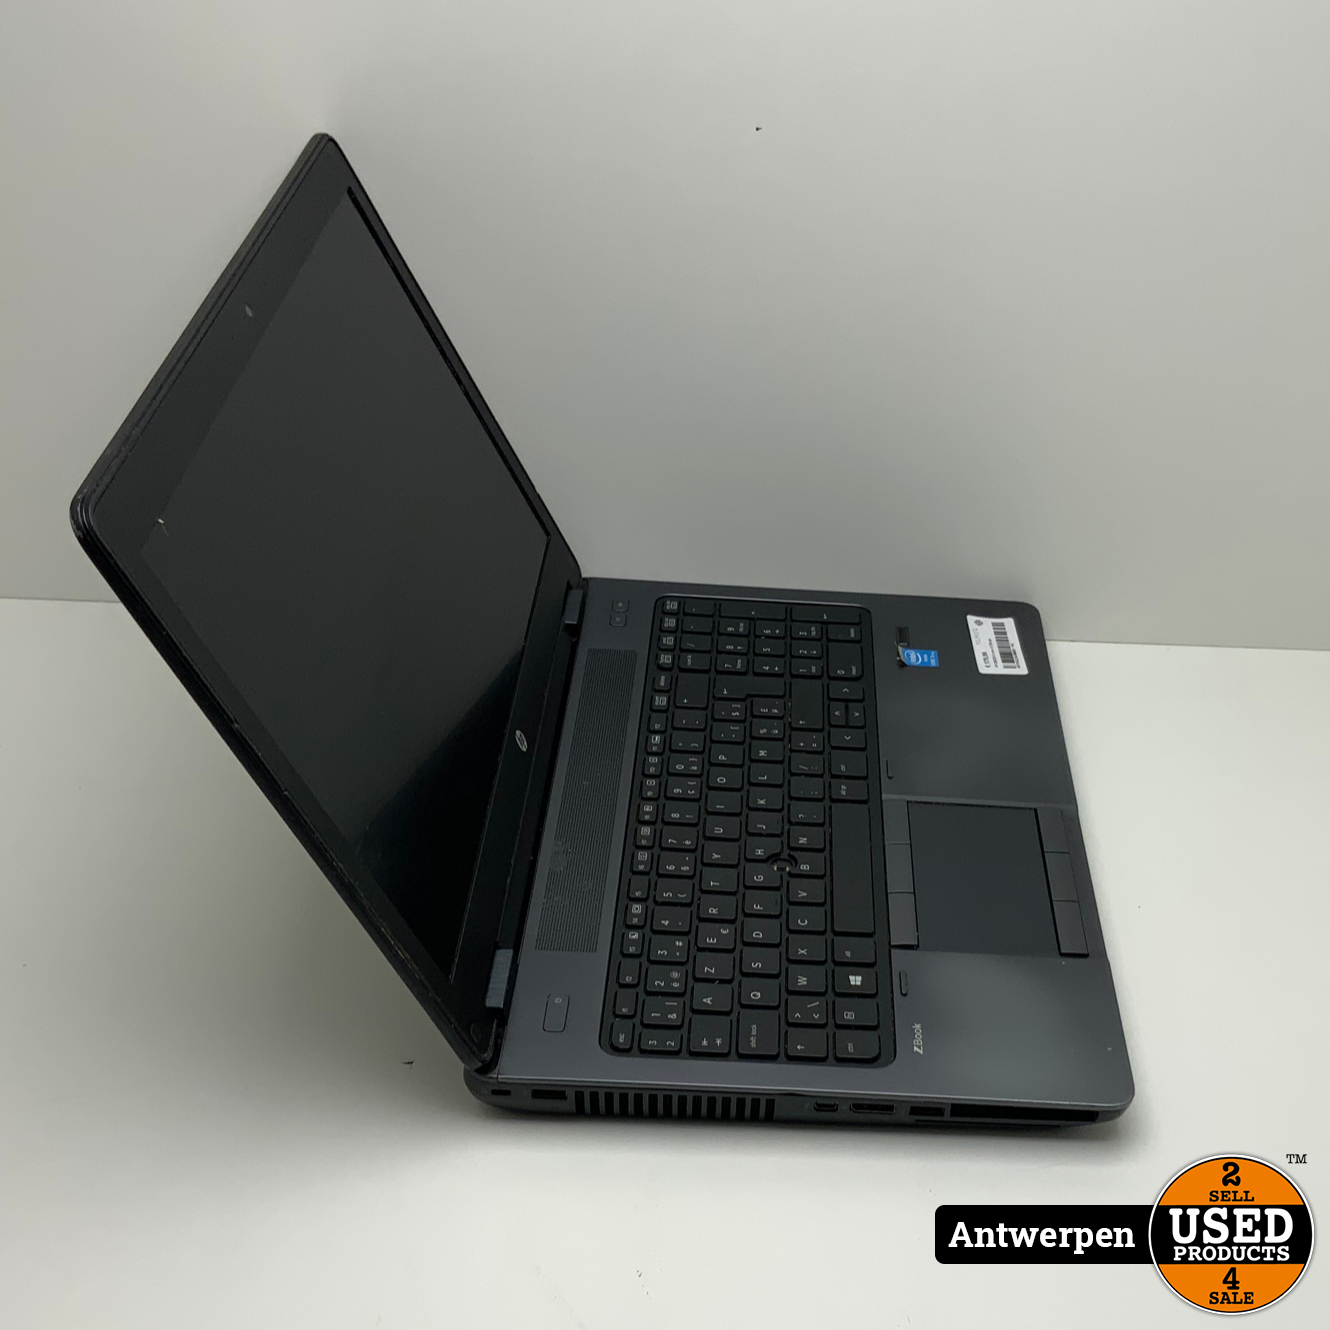 HP Zbook Laptop | Intel i5 250GB 8GB RAM Met garantie Used Products Antwerpen